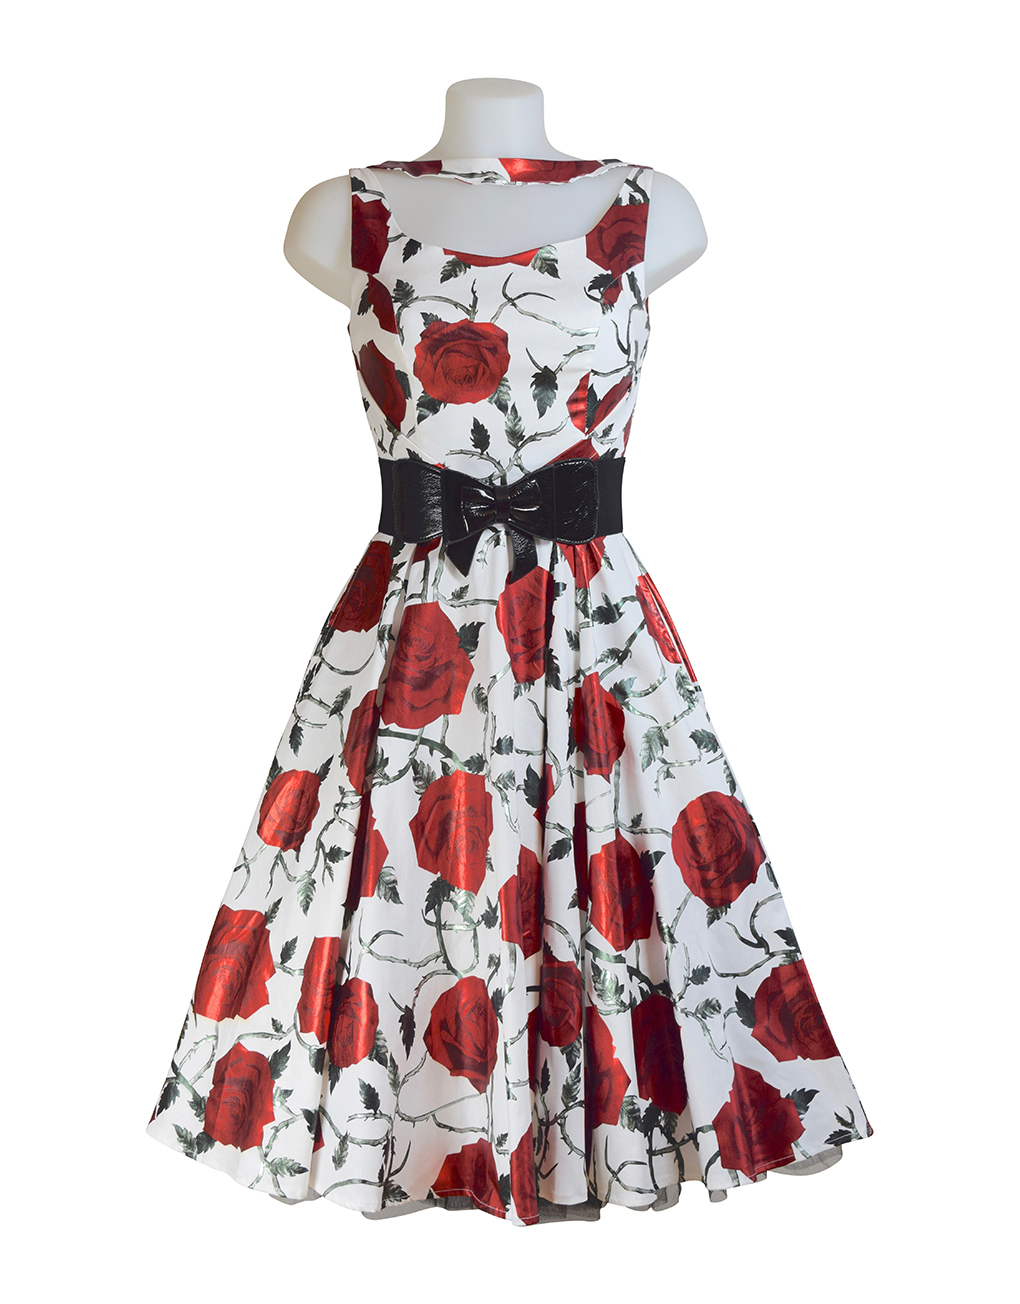 White Polka Dot & Red Rose Print Rockabilly 50s Swing Dress w/ Pockets –  Pretty Kitty Fashion